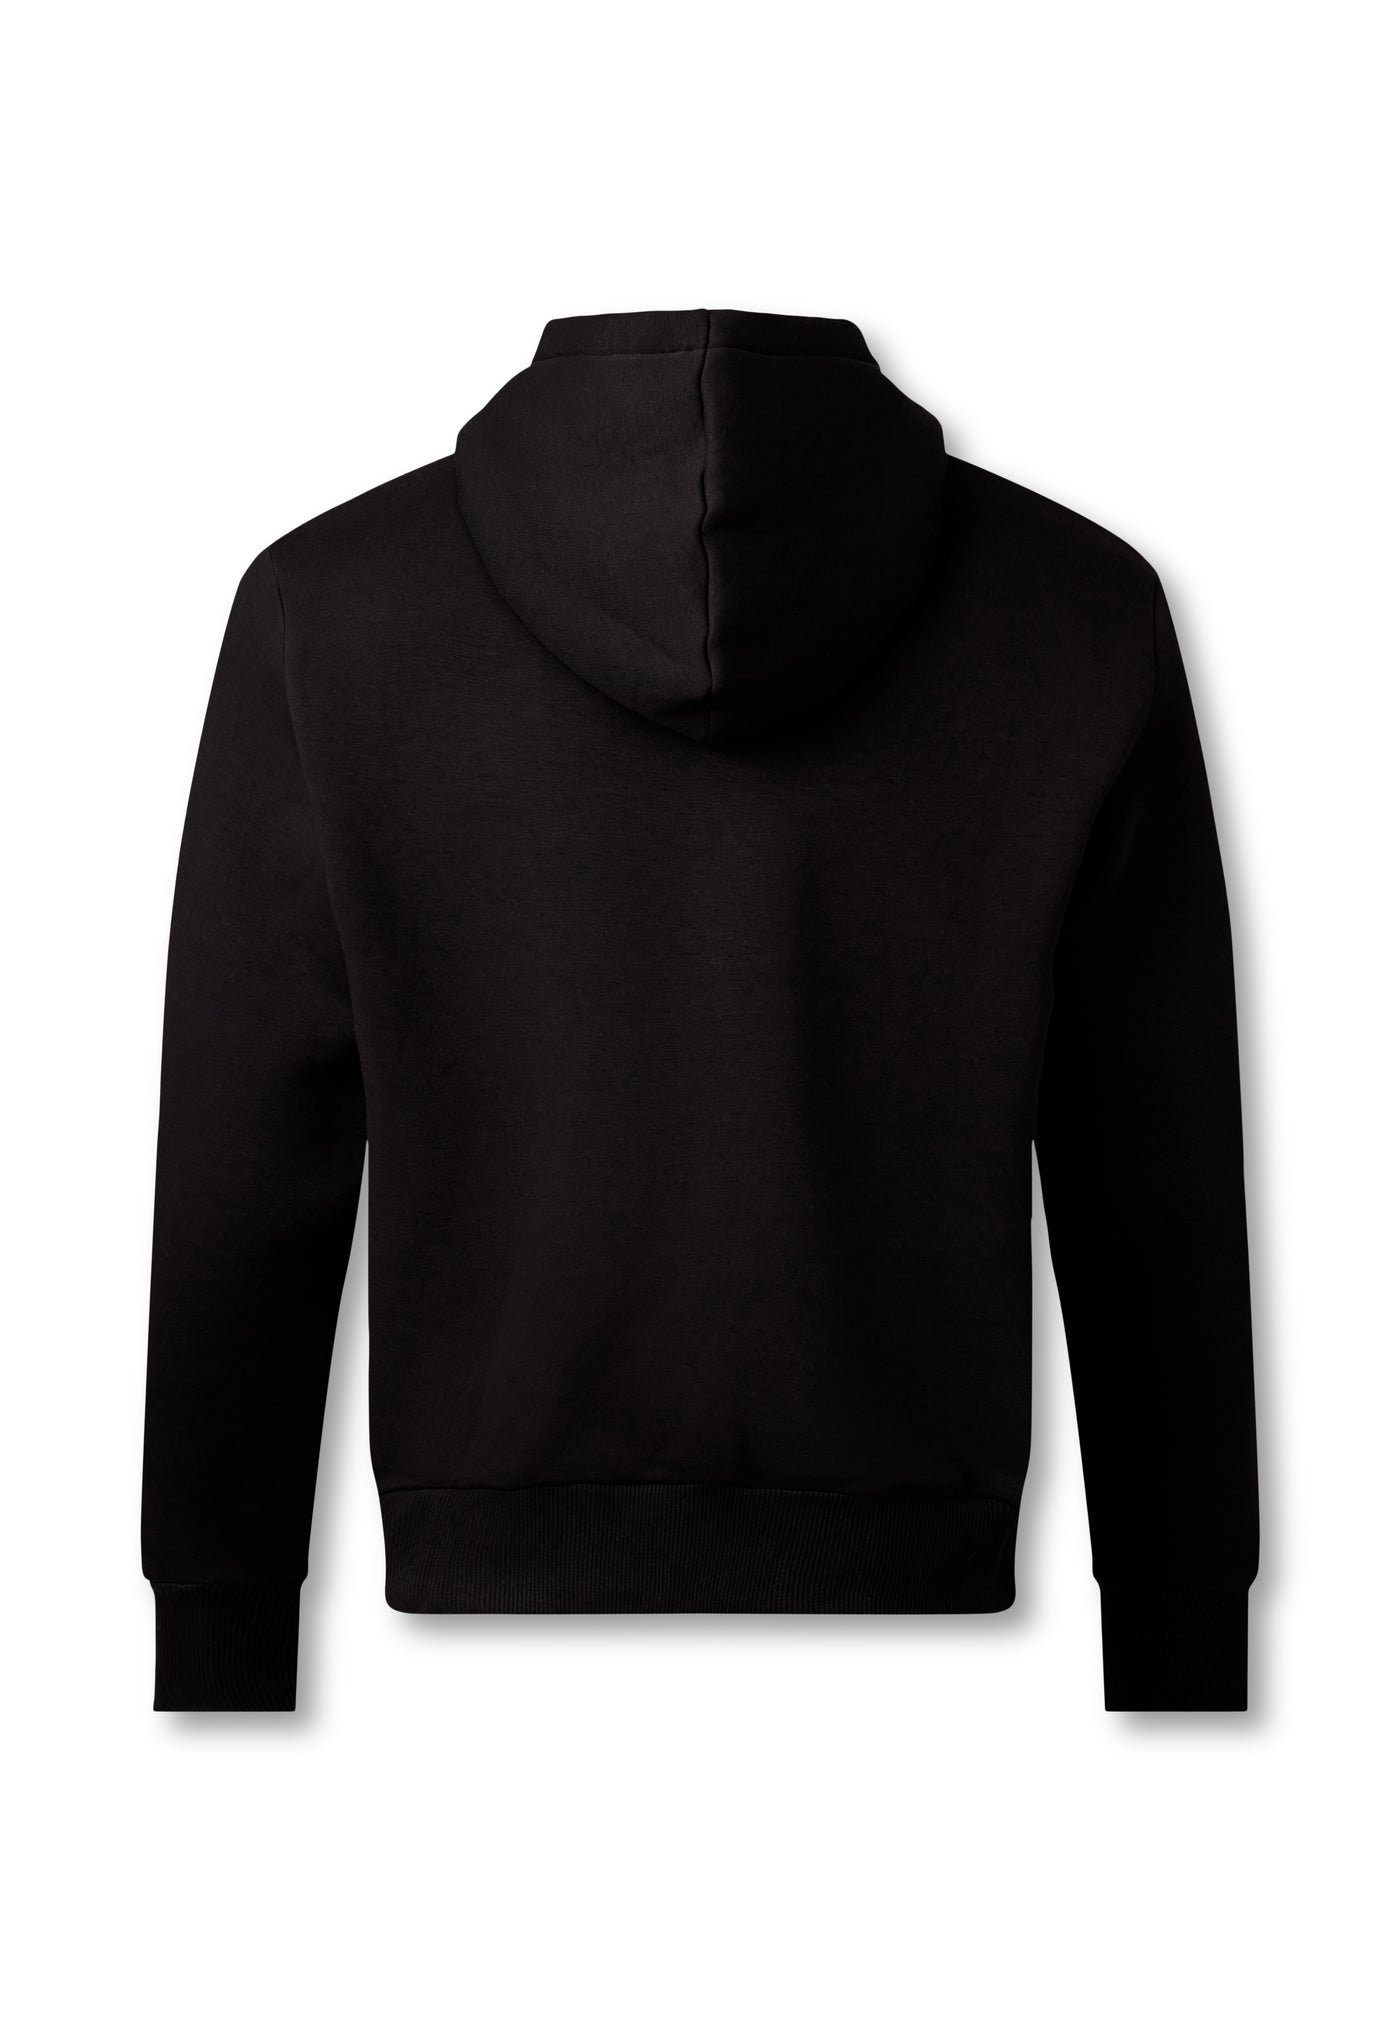 FirstGrade - CLUB / LOGO - Black hoodie 